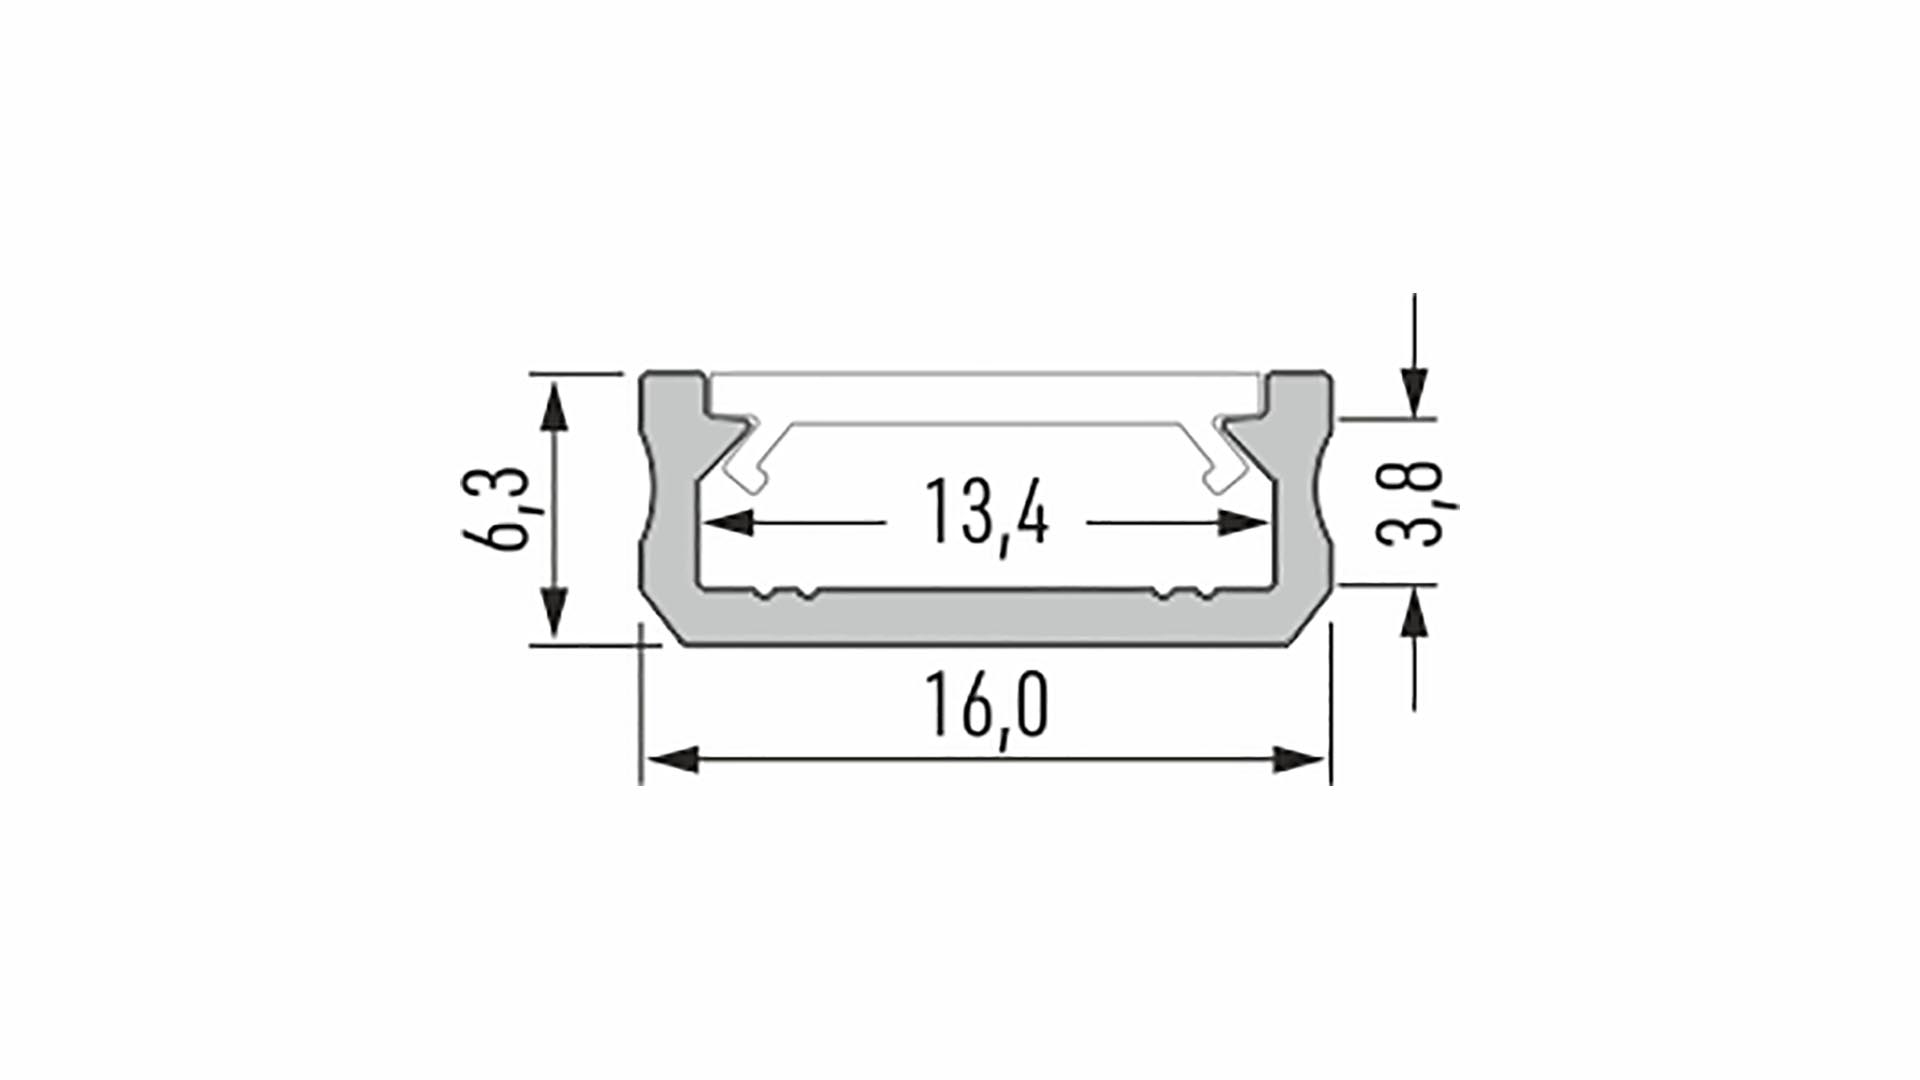 Profil LED LUMINES typ D srebrny anodowany 3 m